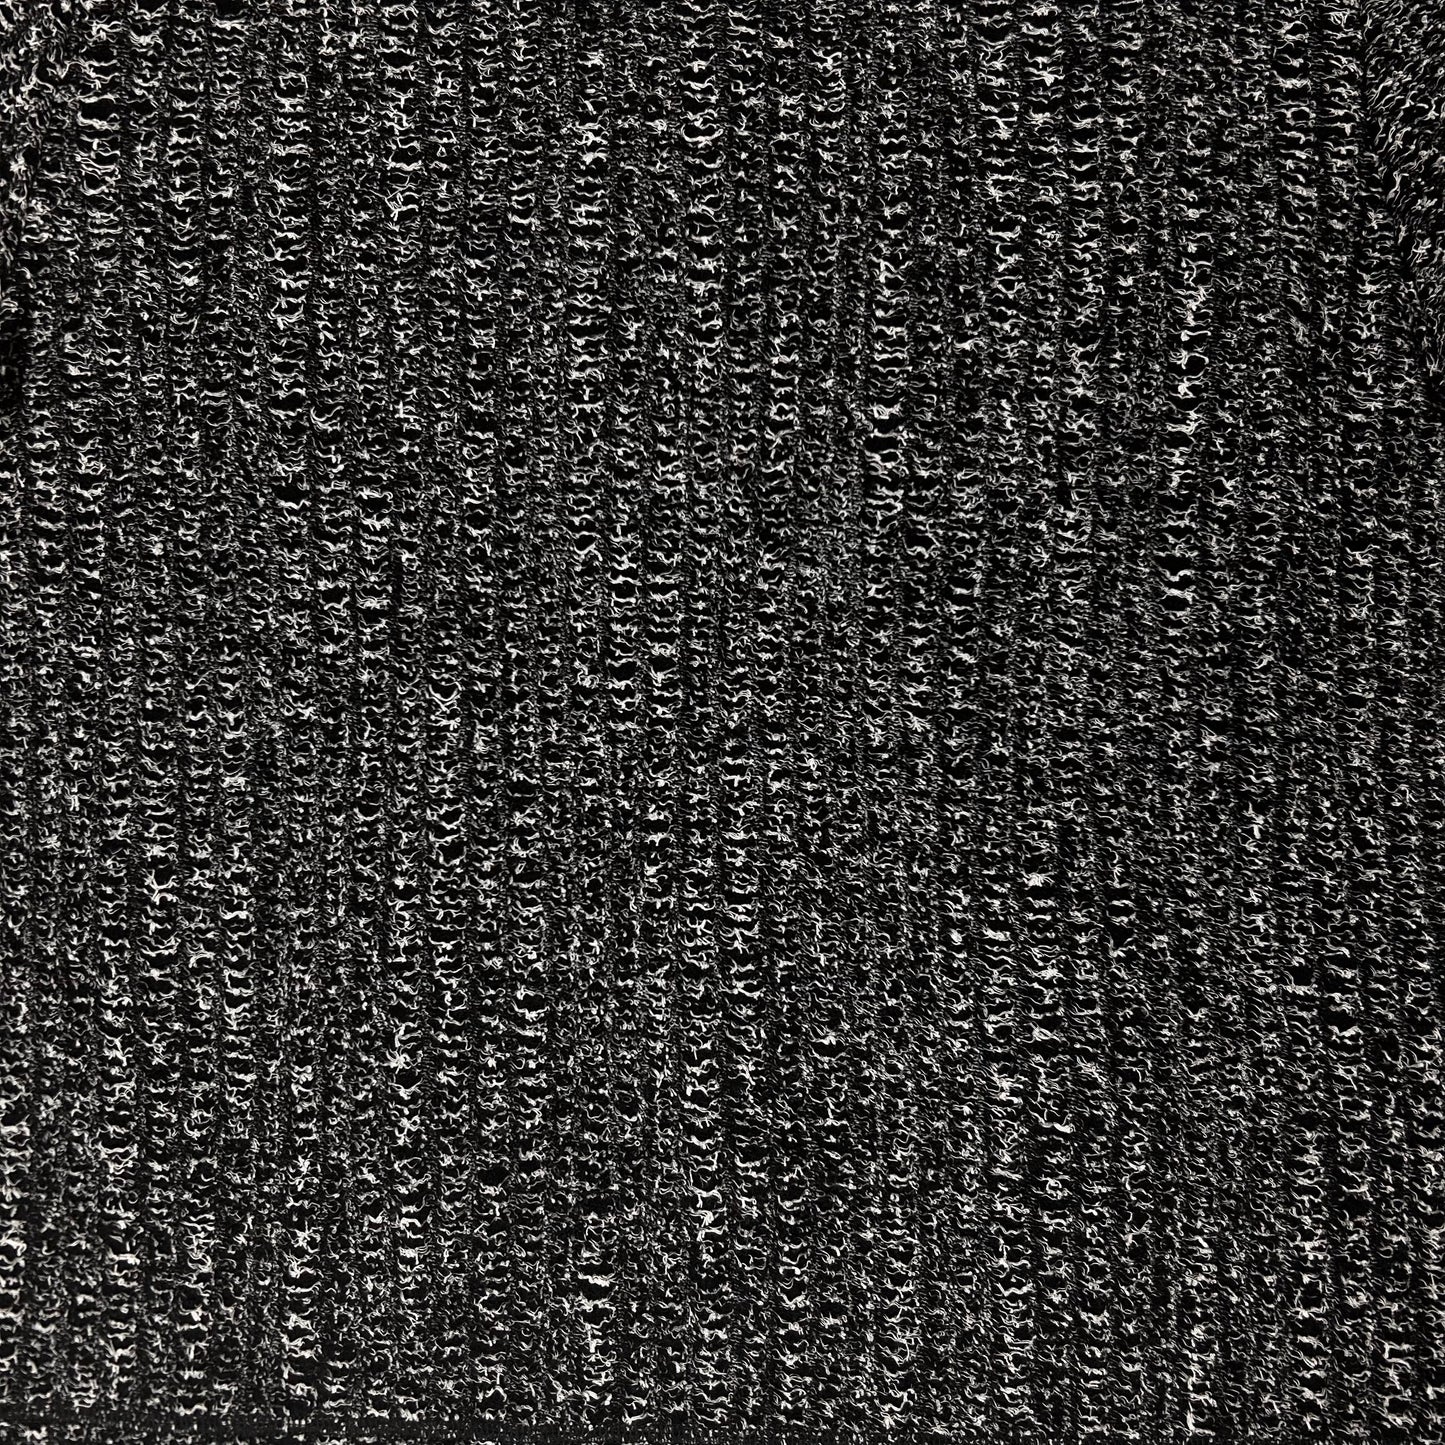 Dirk Bikkembergs Cropped Bouclé Wool Sweater Black - AW17